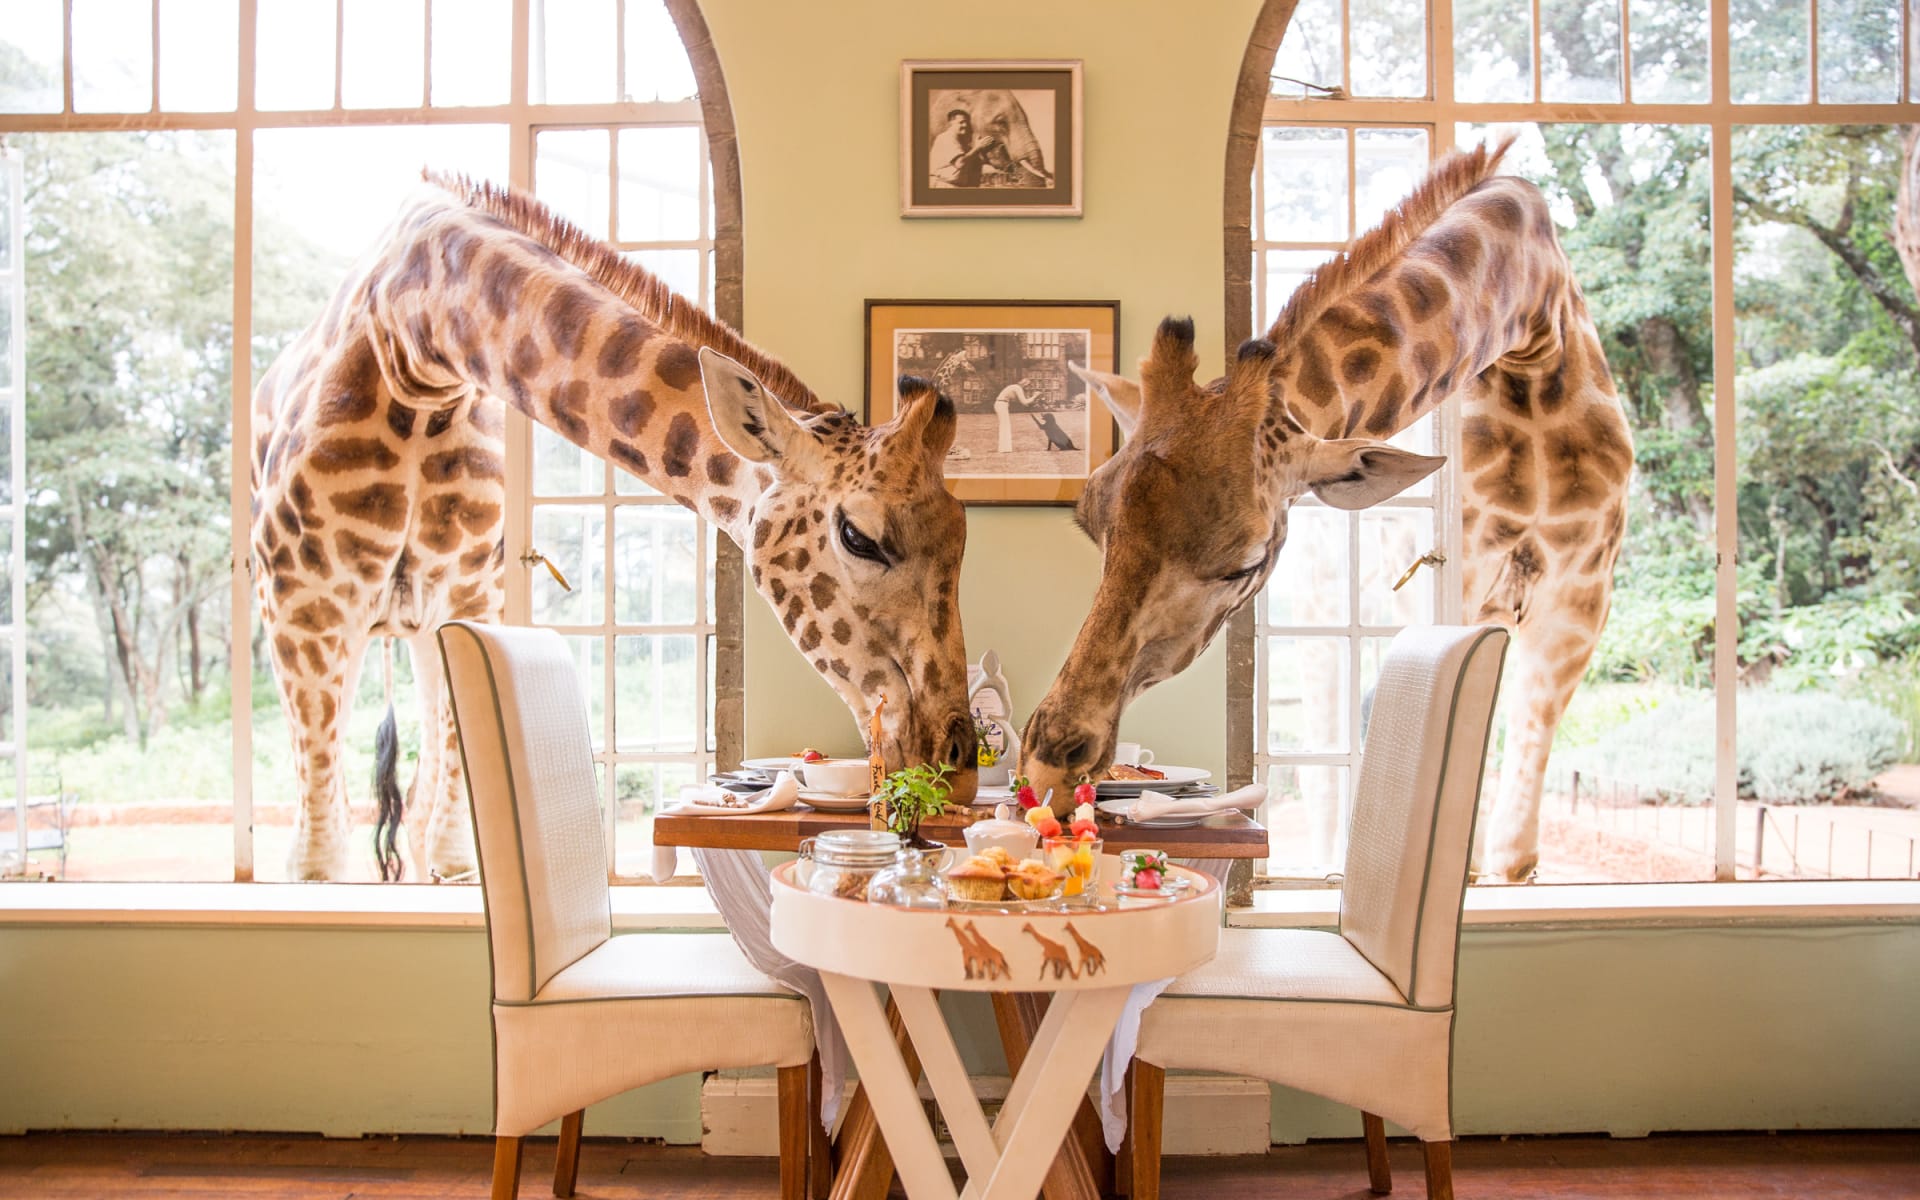 Giraffe_Manor_Breakfast_Giraffes_rztsld